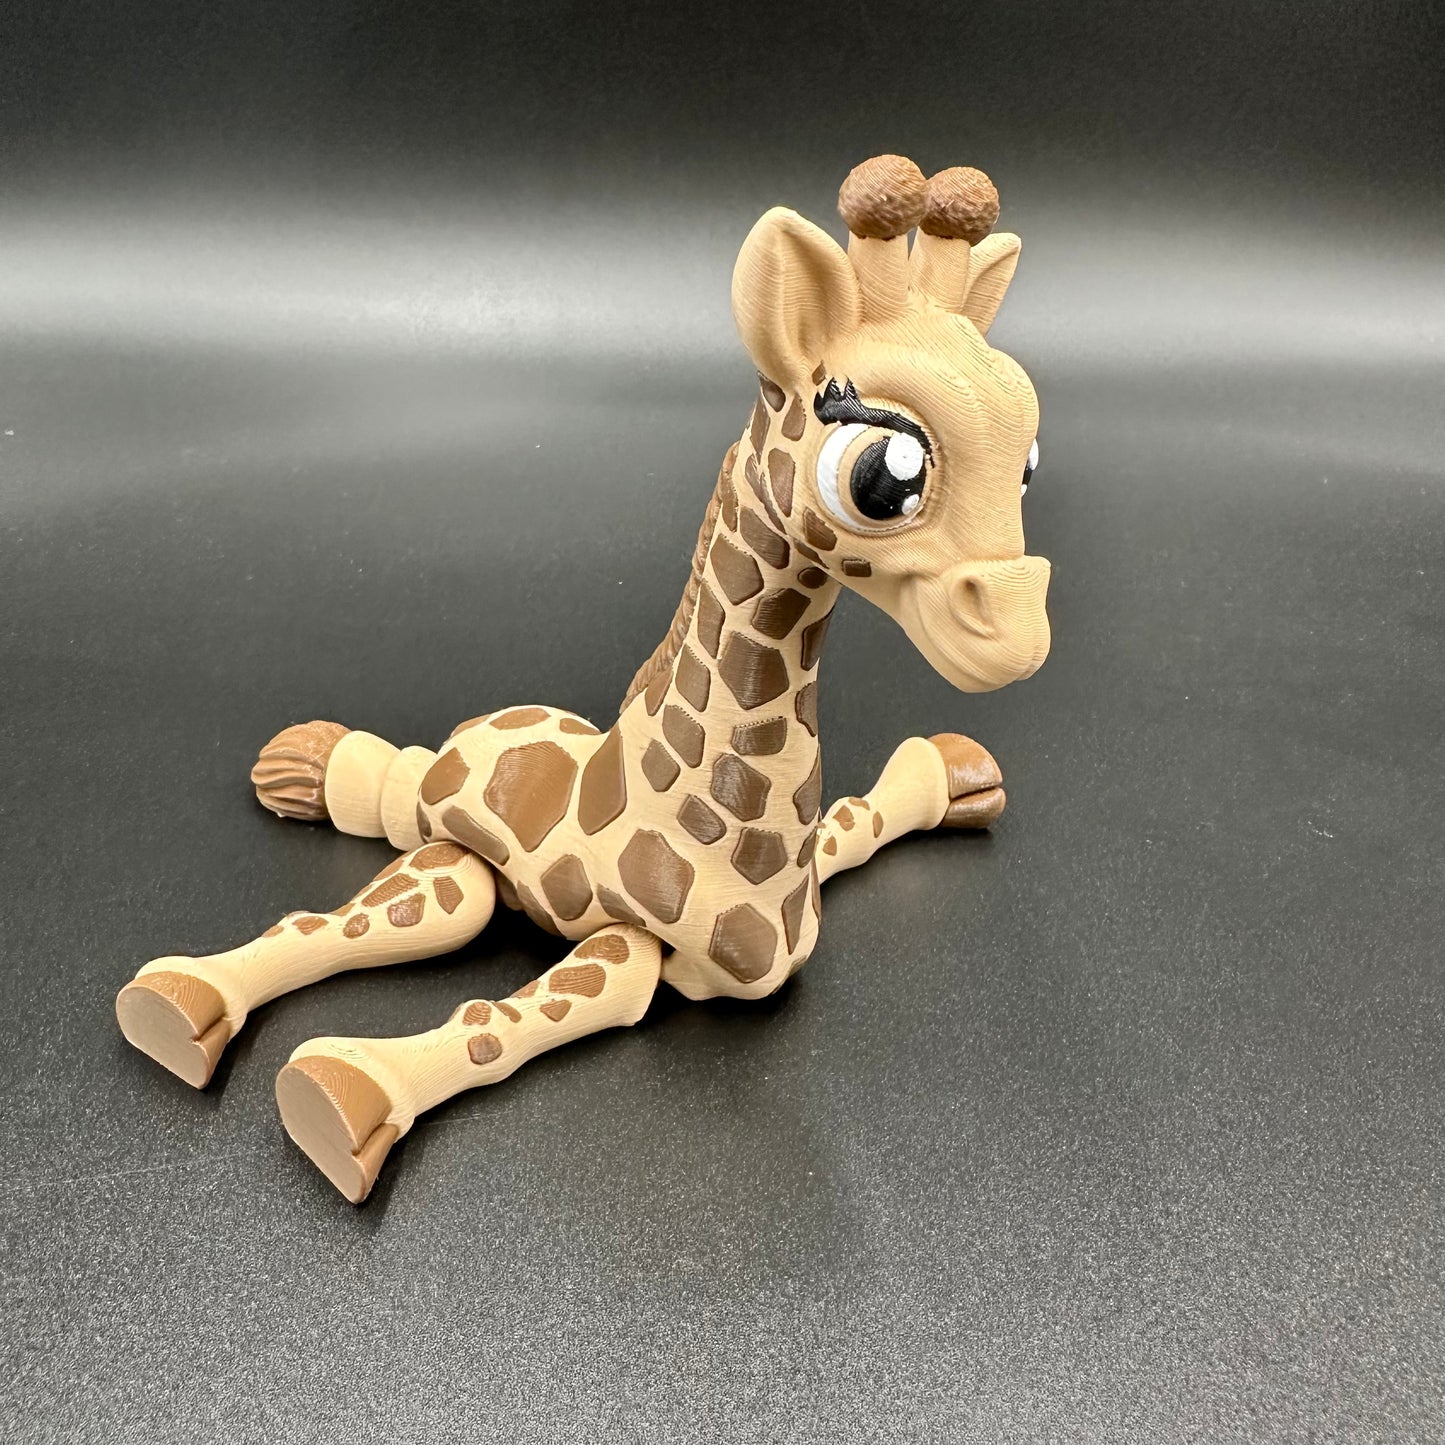 3D Printed Giraffe